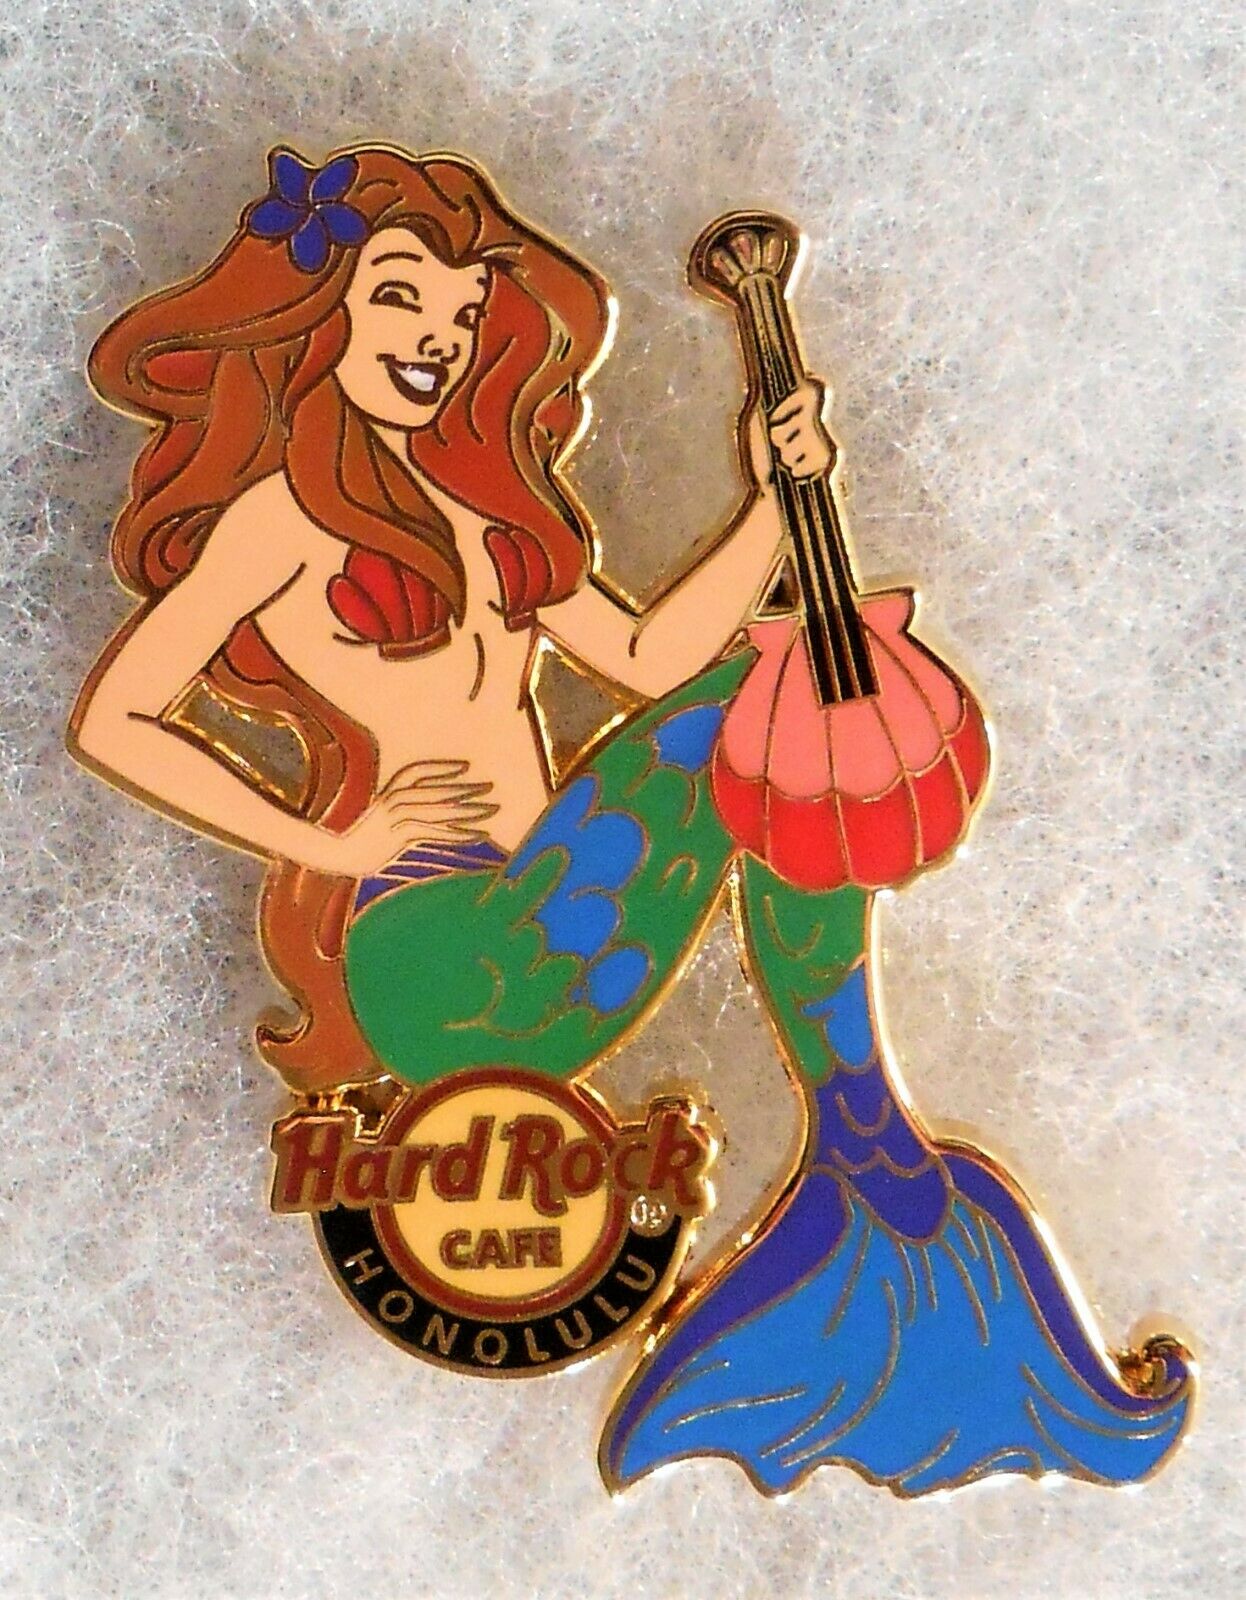 Hard Rock Cafe Honolulu Sexy Mermaid Girl Holding Shell Guitar Pin # 536852